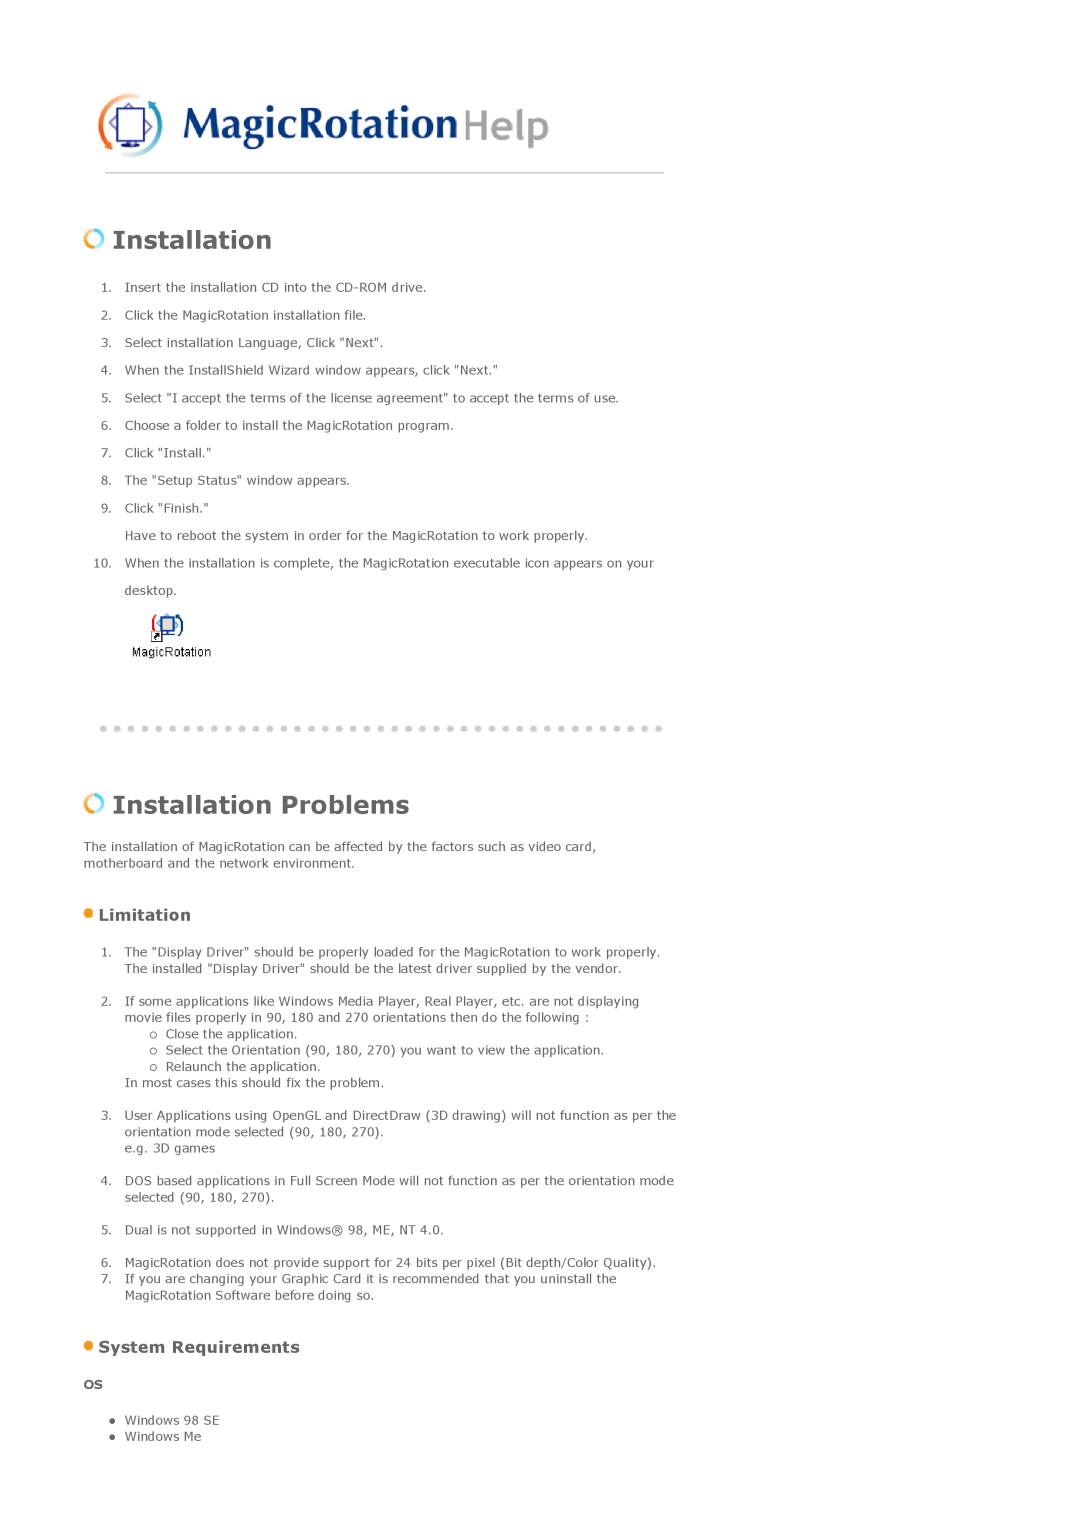 Samsung 714BM manual Installation Problems, Limitation, System Requirements 